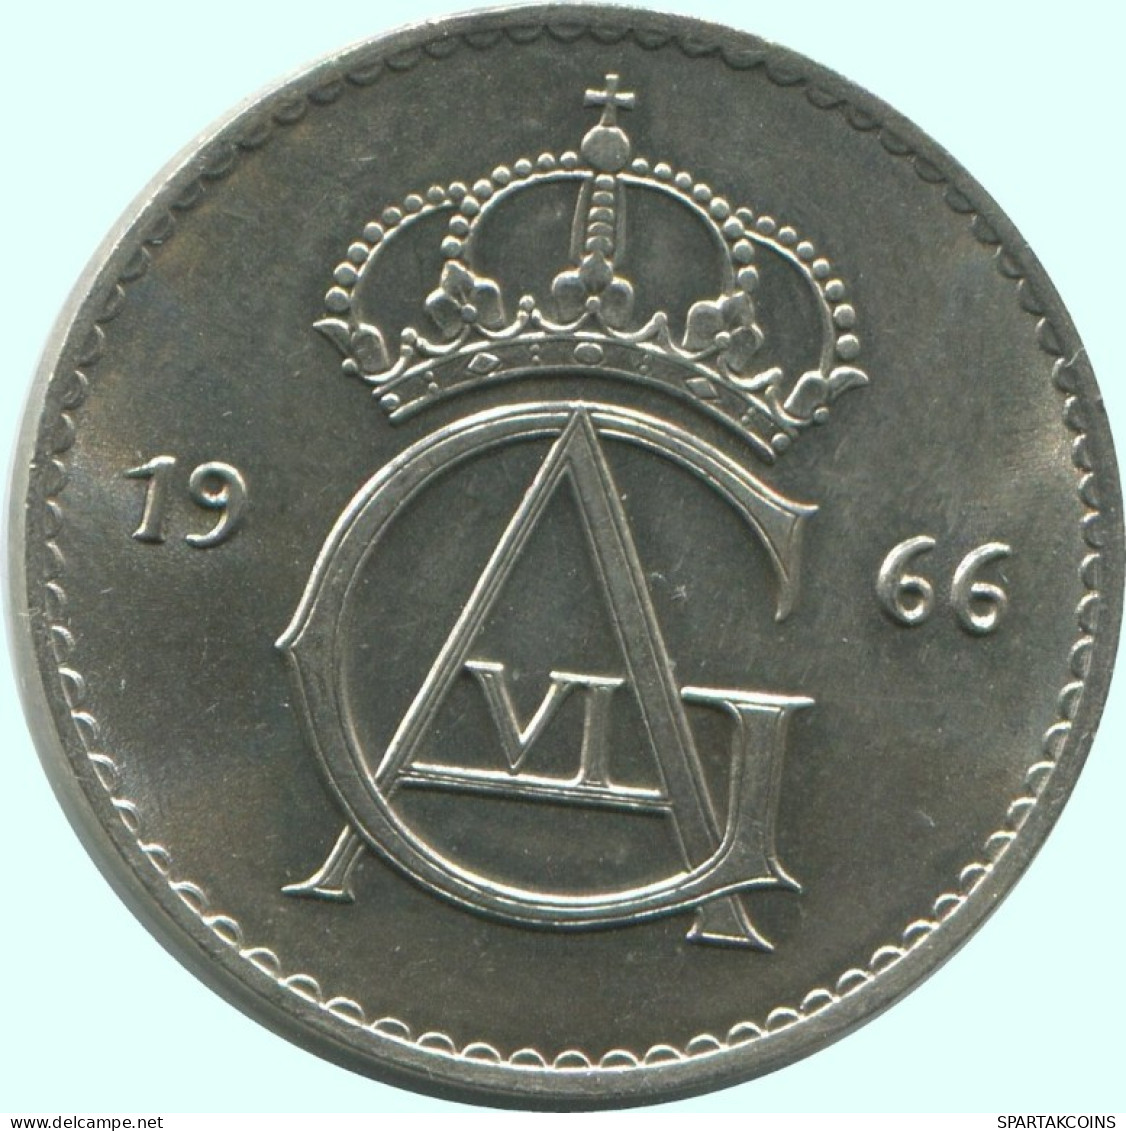 50 ORE 1966 SCHWEDEN SWEDEN Münze #AC727.2.D.A - Suède